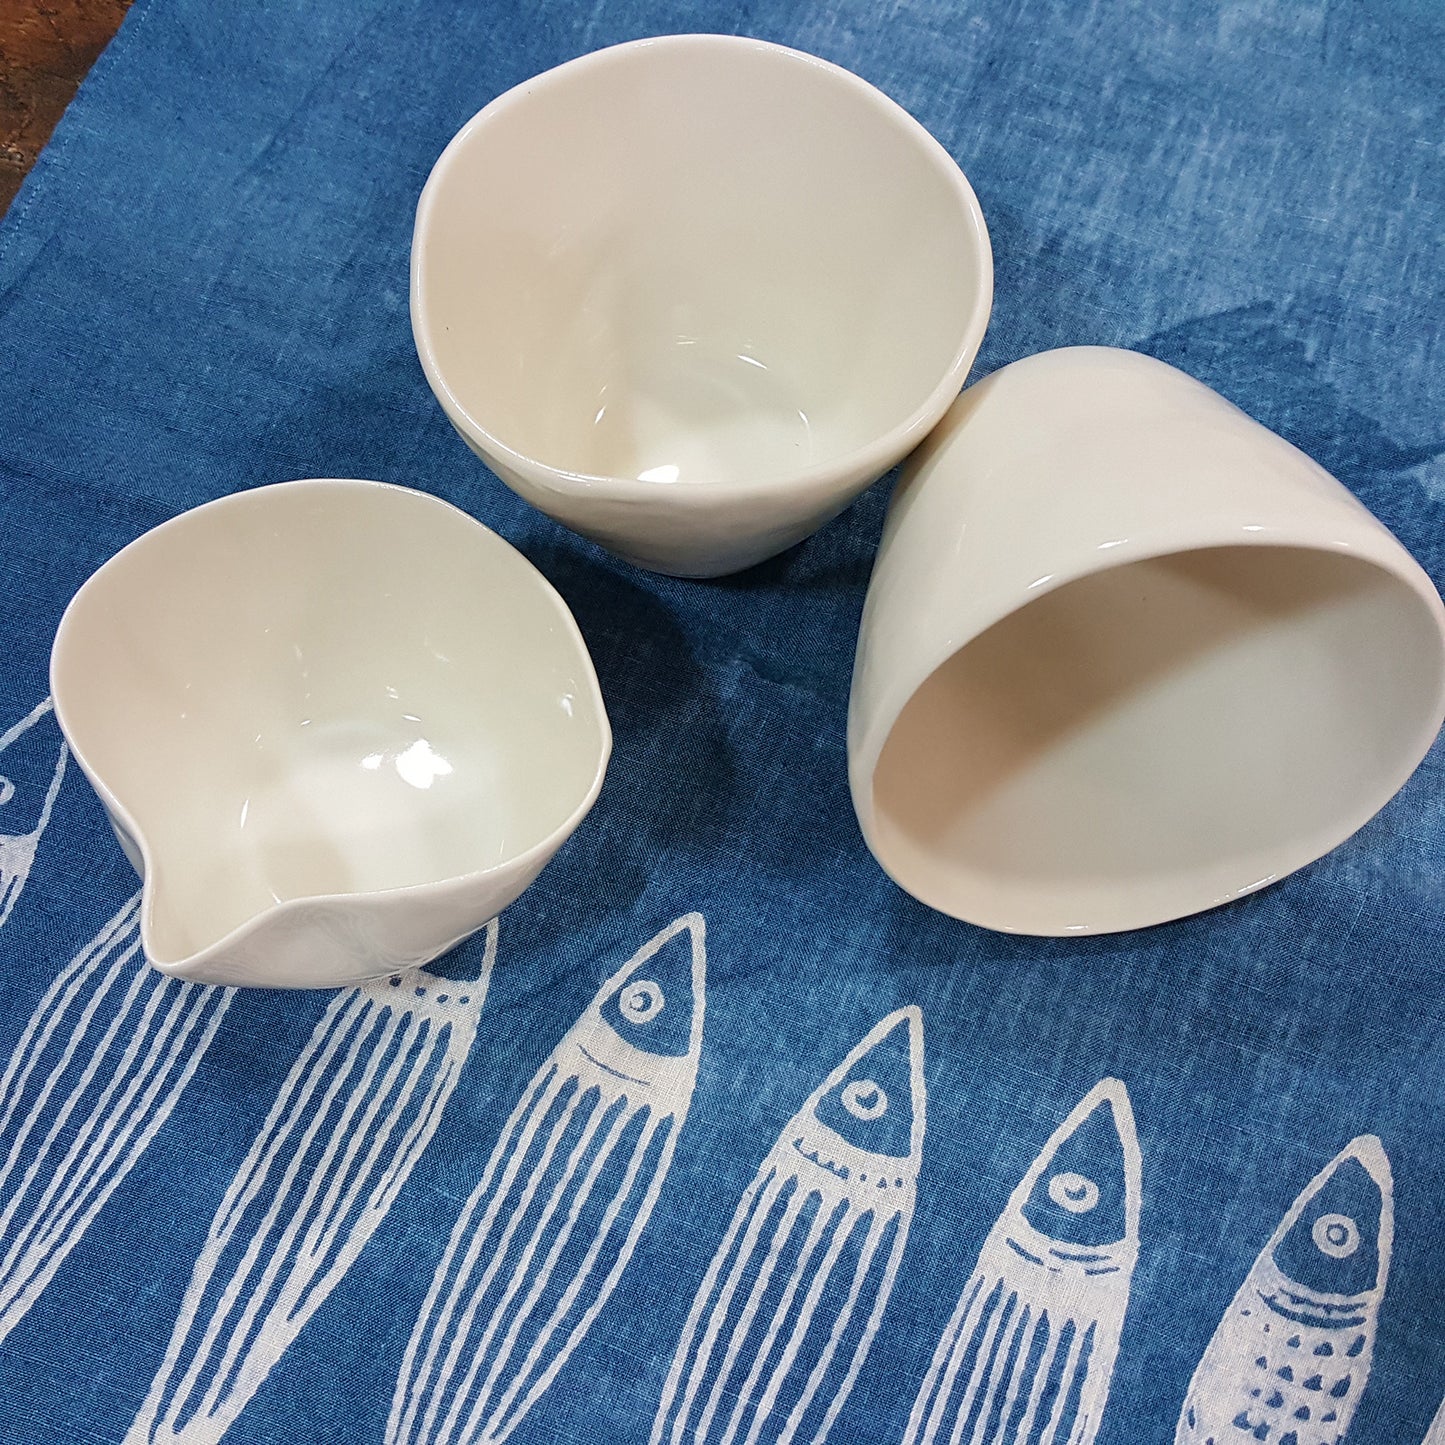 Porcelain cups with milk jug